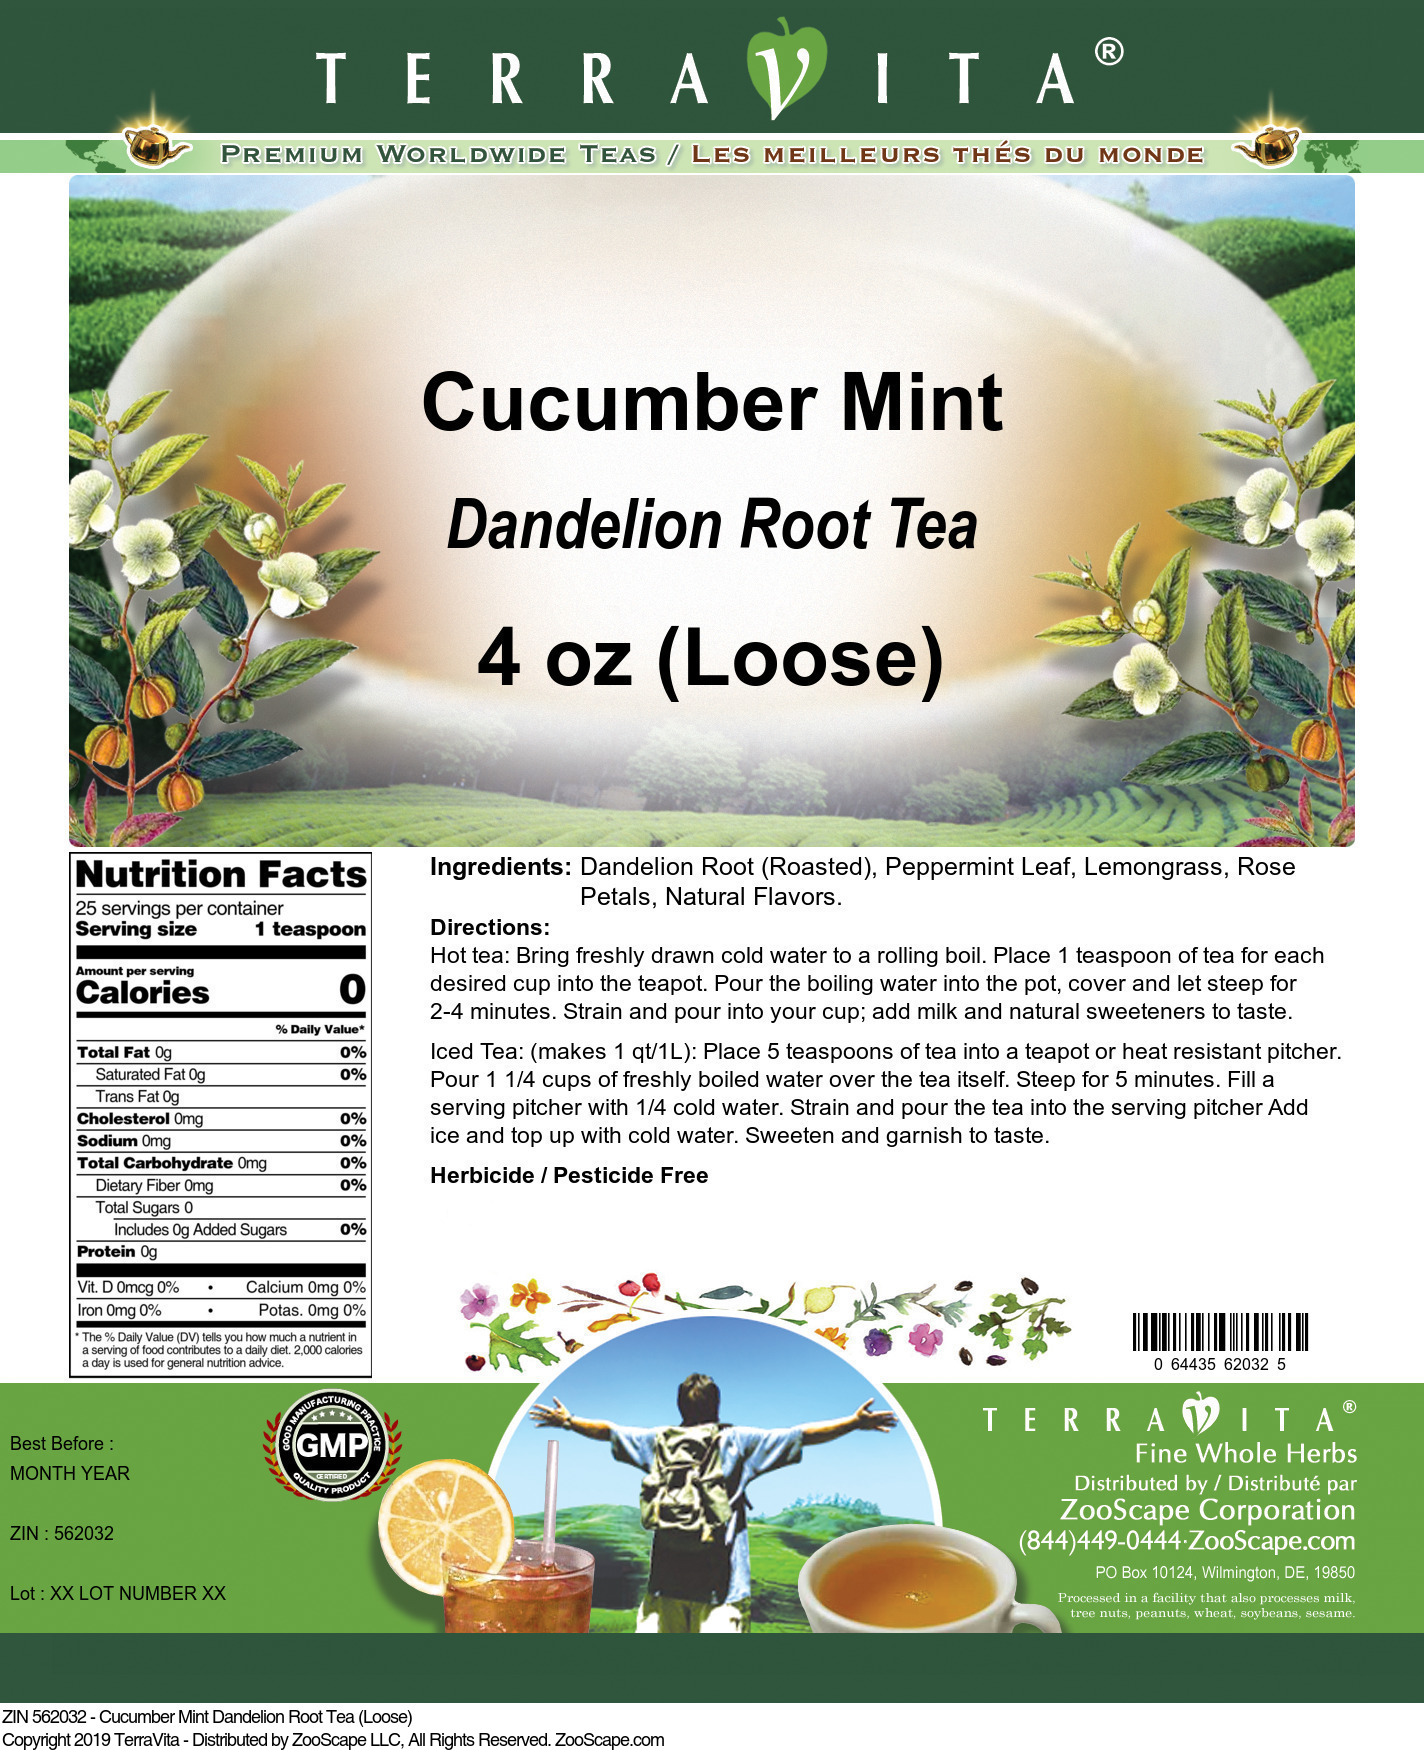 Cucumber Mint Dandelion Root Tea (Loose) - Label